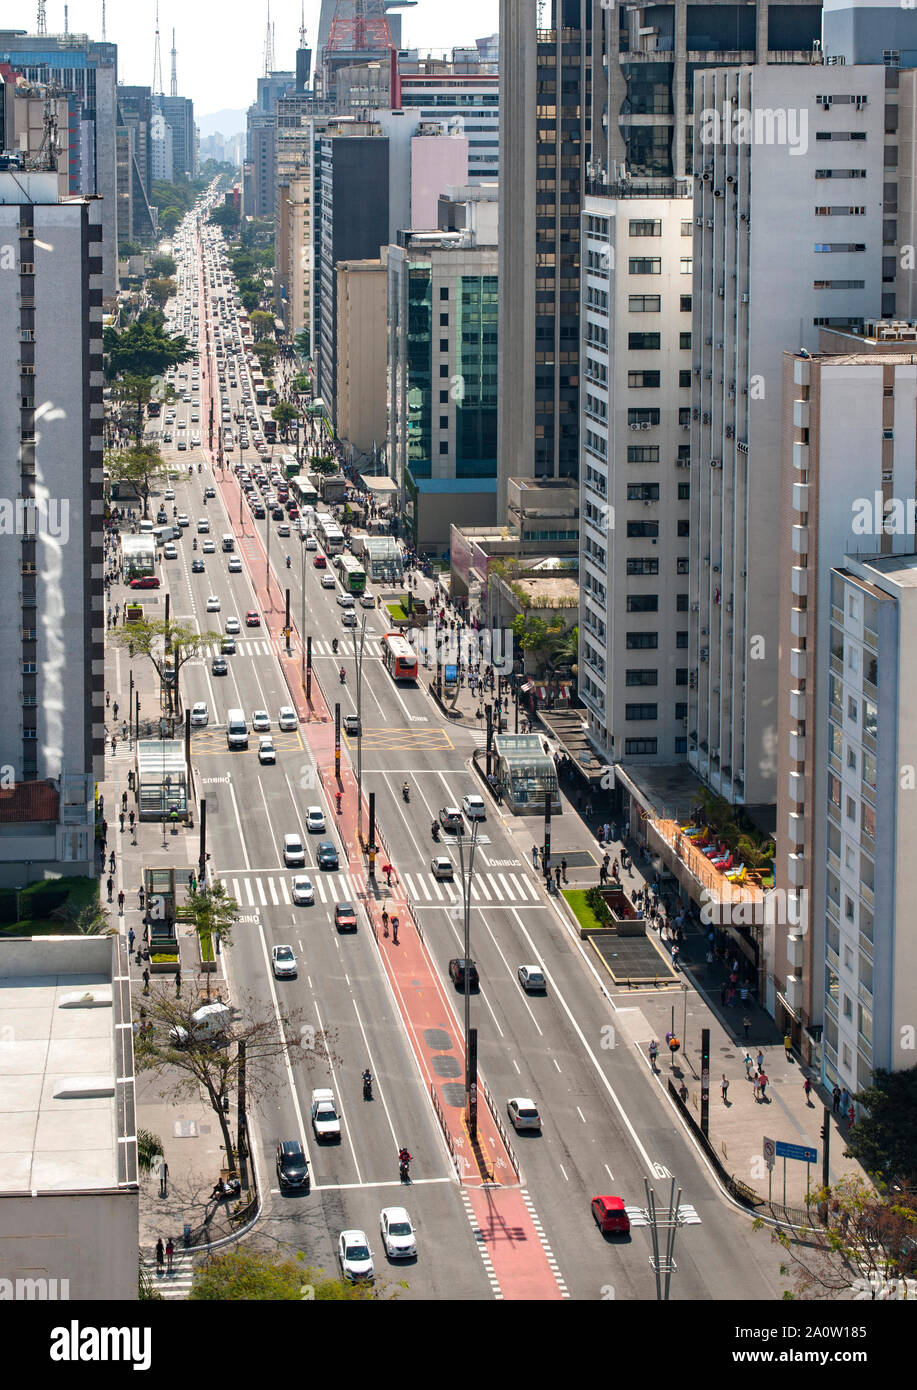 https://c8.alamy.com/comp/2A0W185/paulista-avenue-in-so-paulo-brazil-2A0W185.jpg